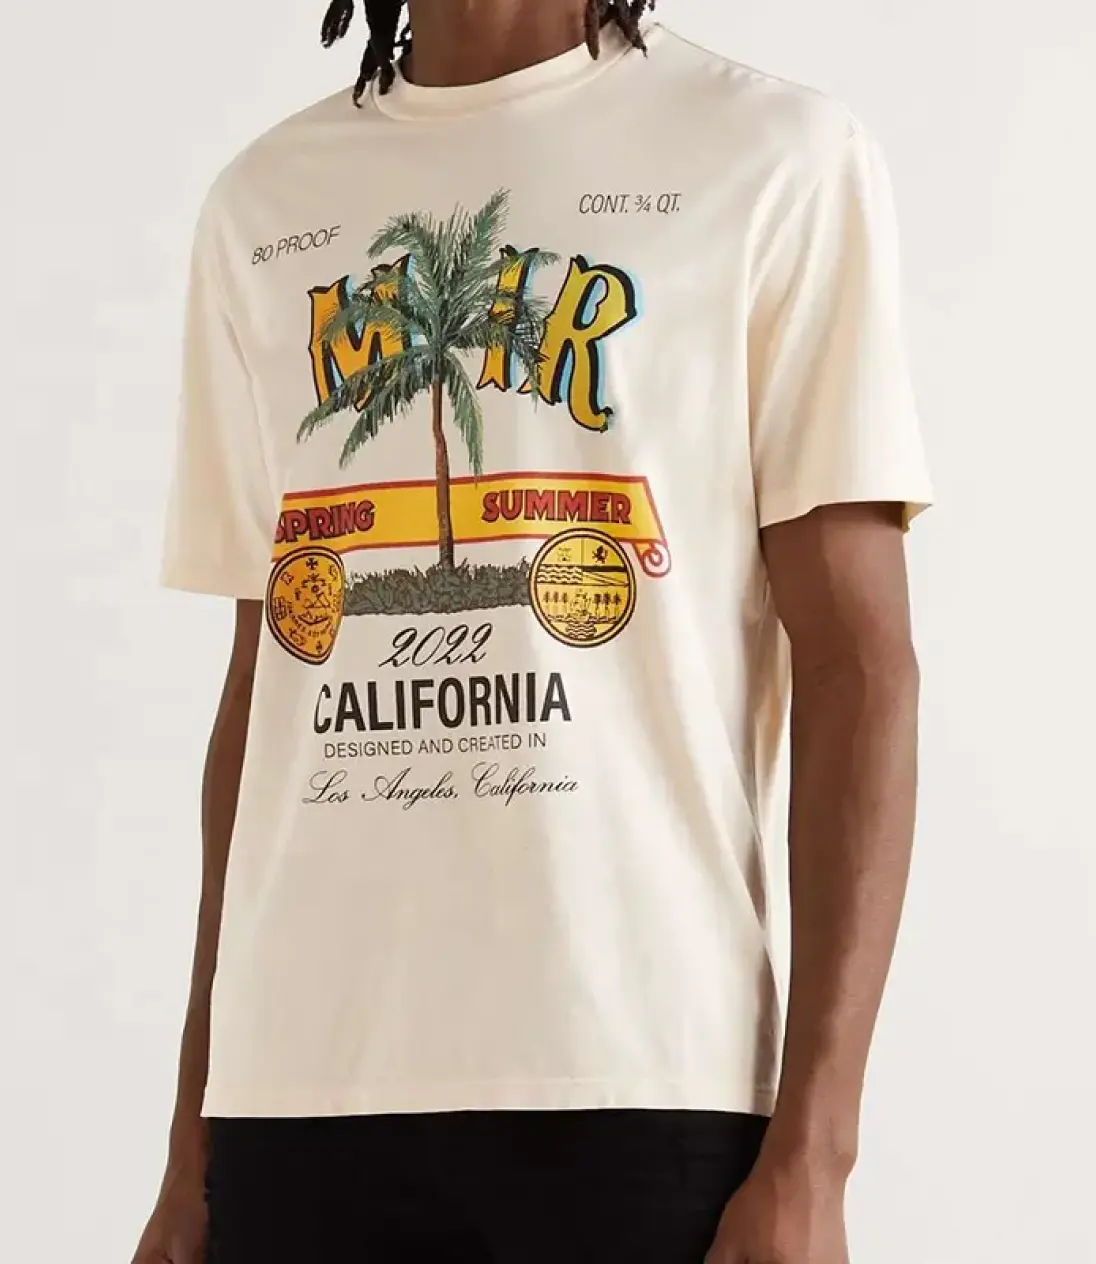 Tshirt with California print